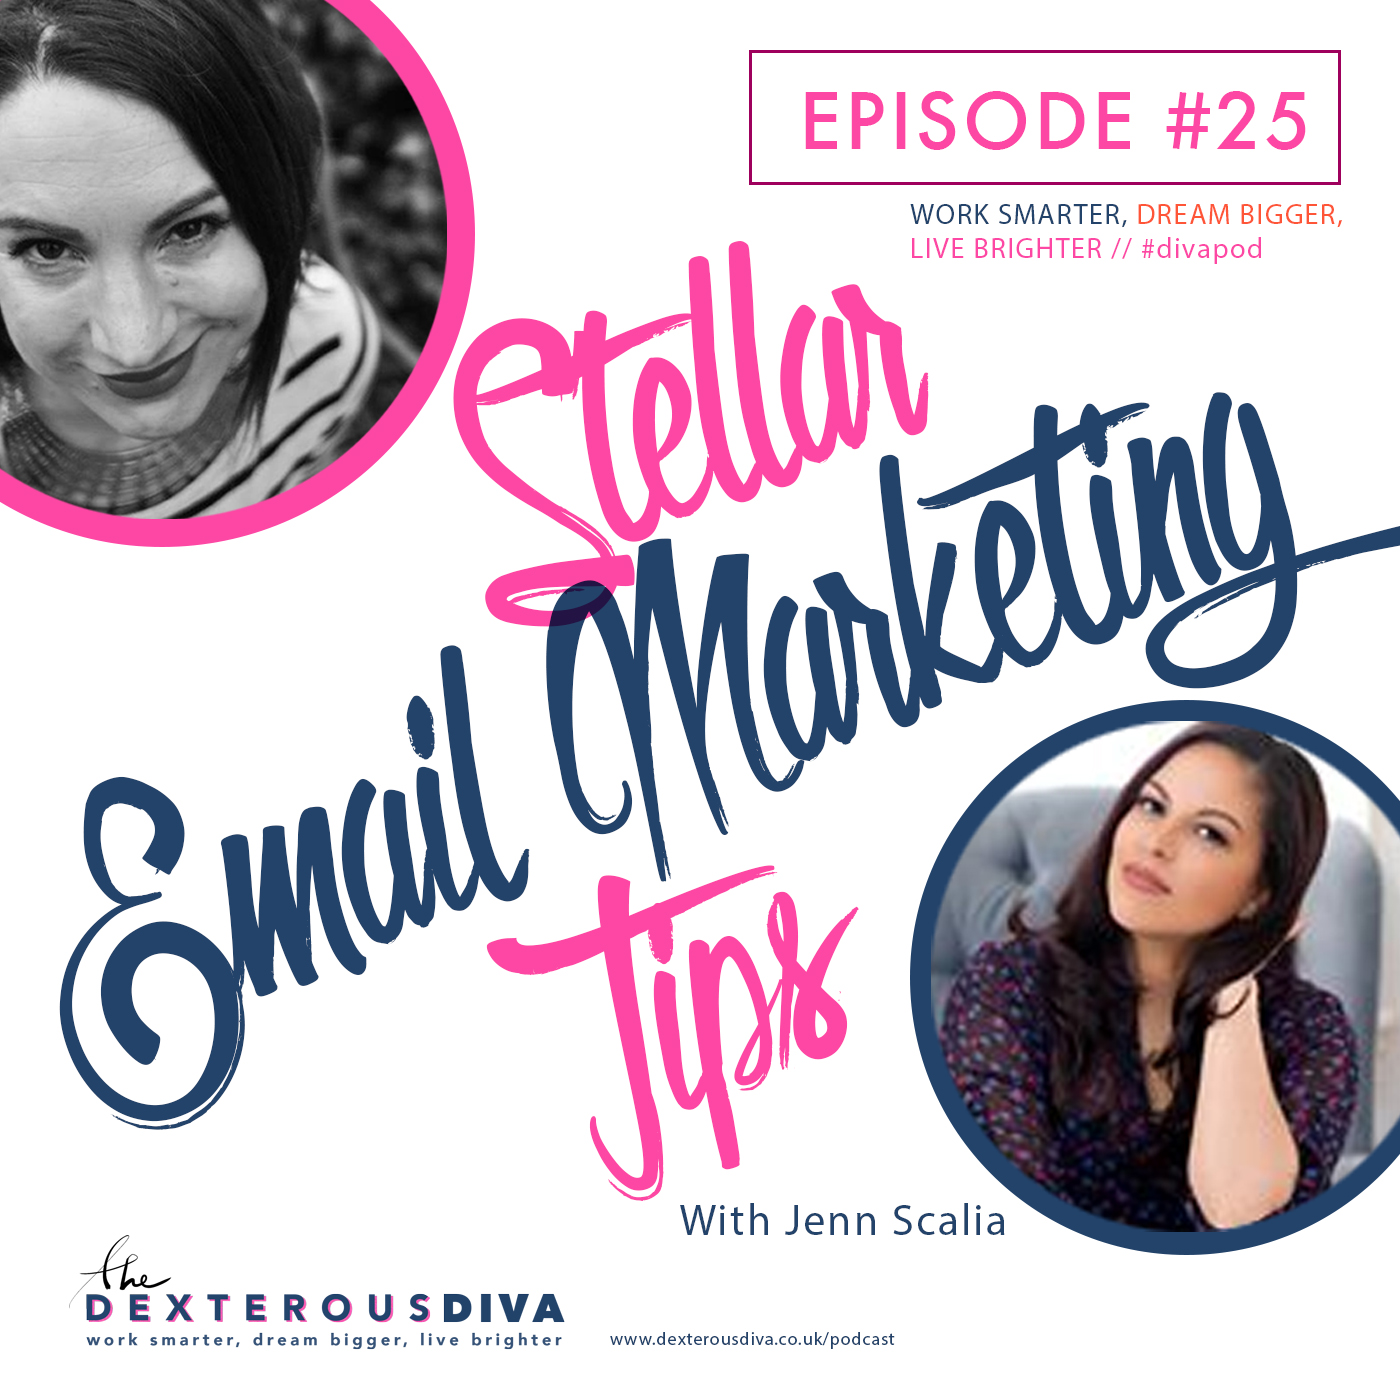 Episode #25 - Stellar Email Marketing Tips with Jenn Scalia